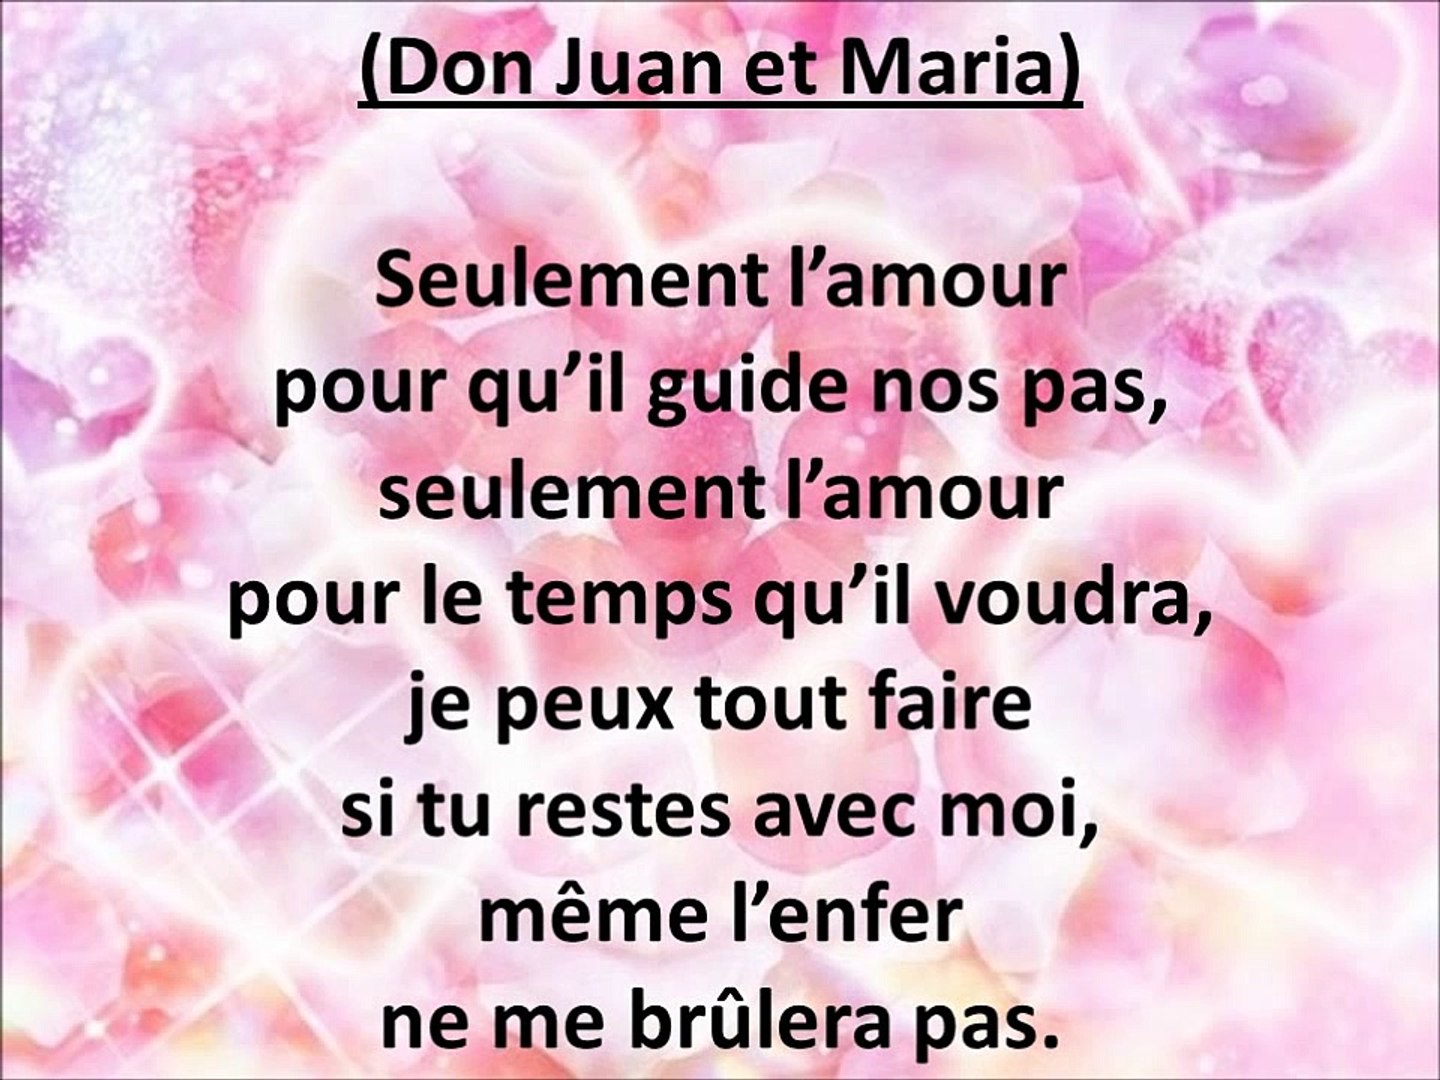 Don Juan - Seulement l'amour - Lyrics - video Dailymotion